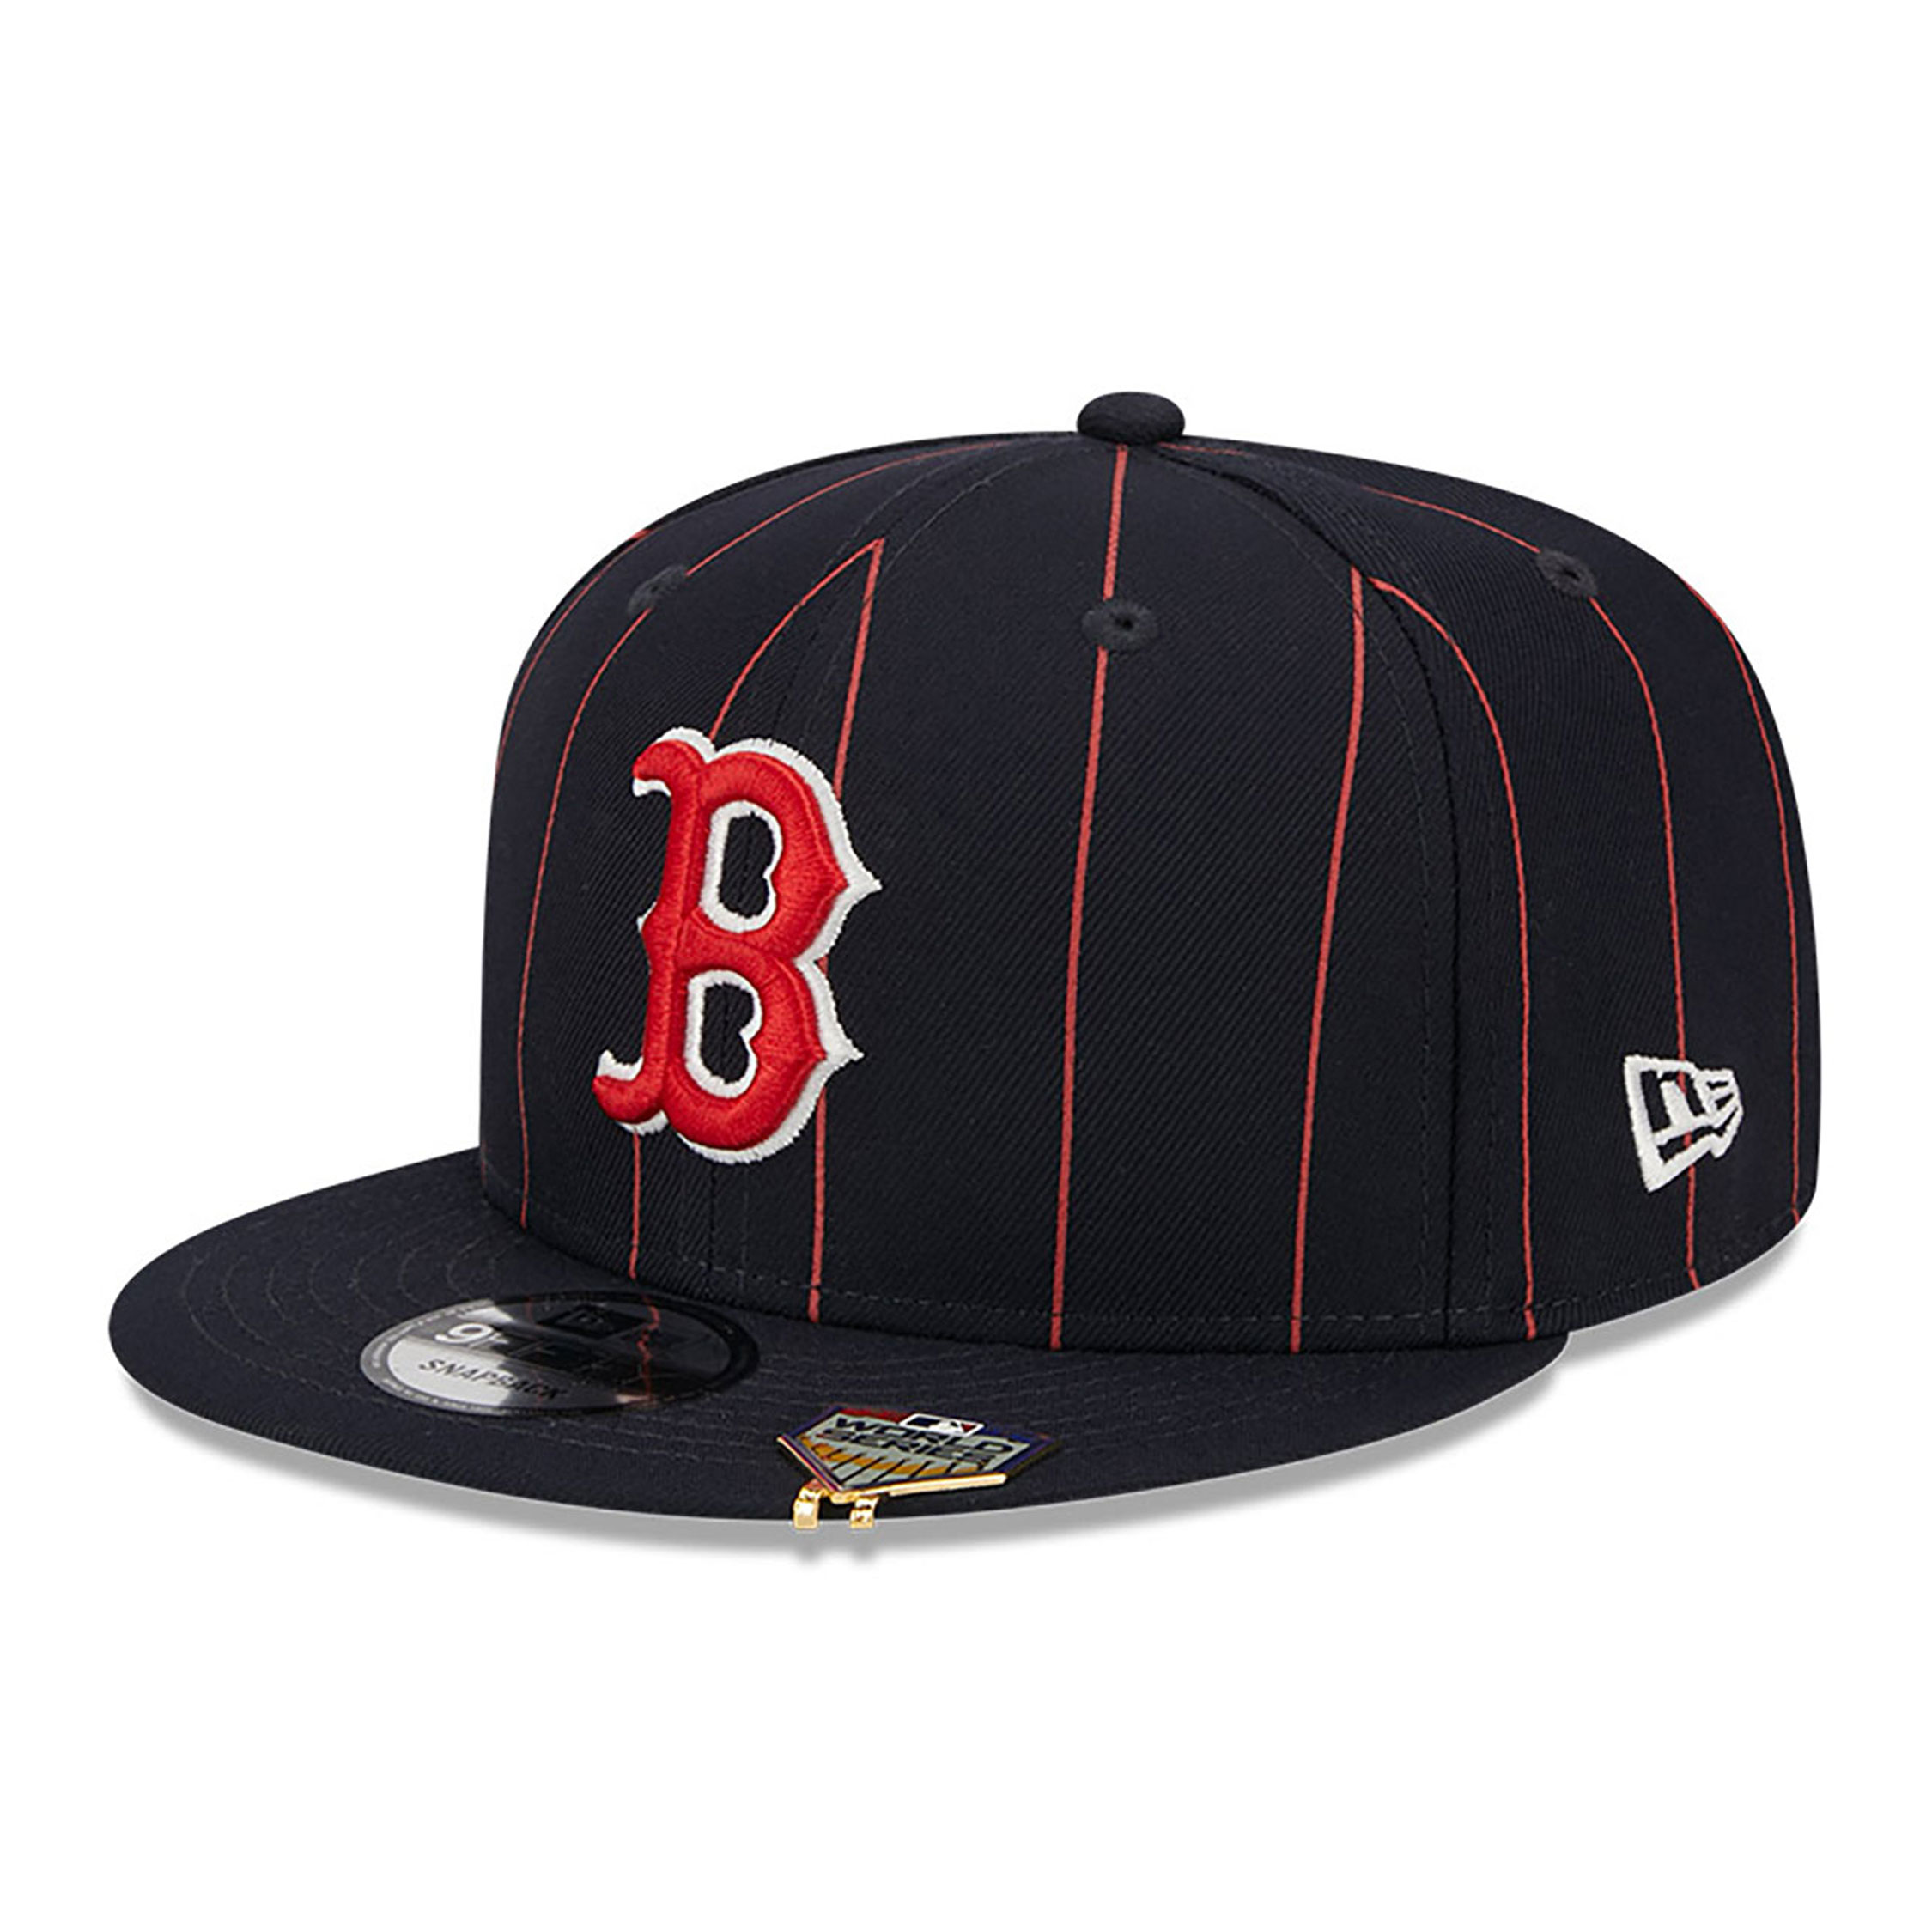 Gorra New Era Boston Red Sox Pinstripe 9FIFTY Snapback